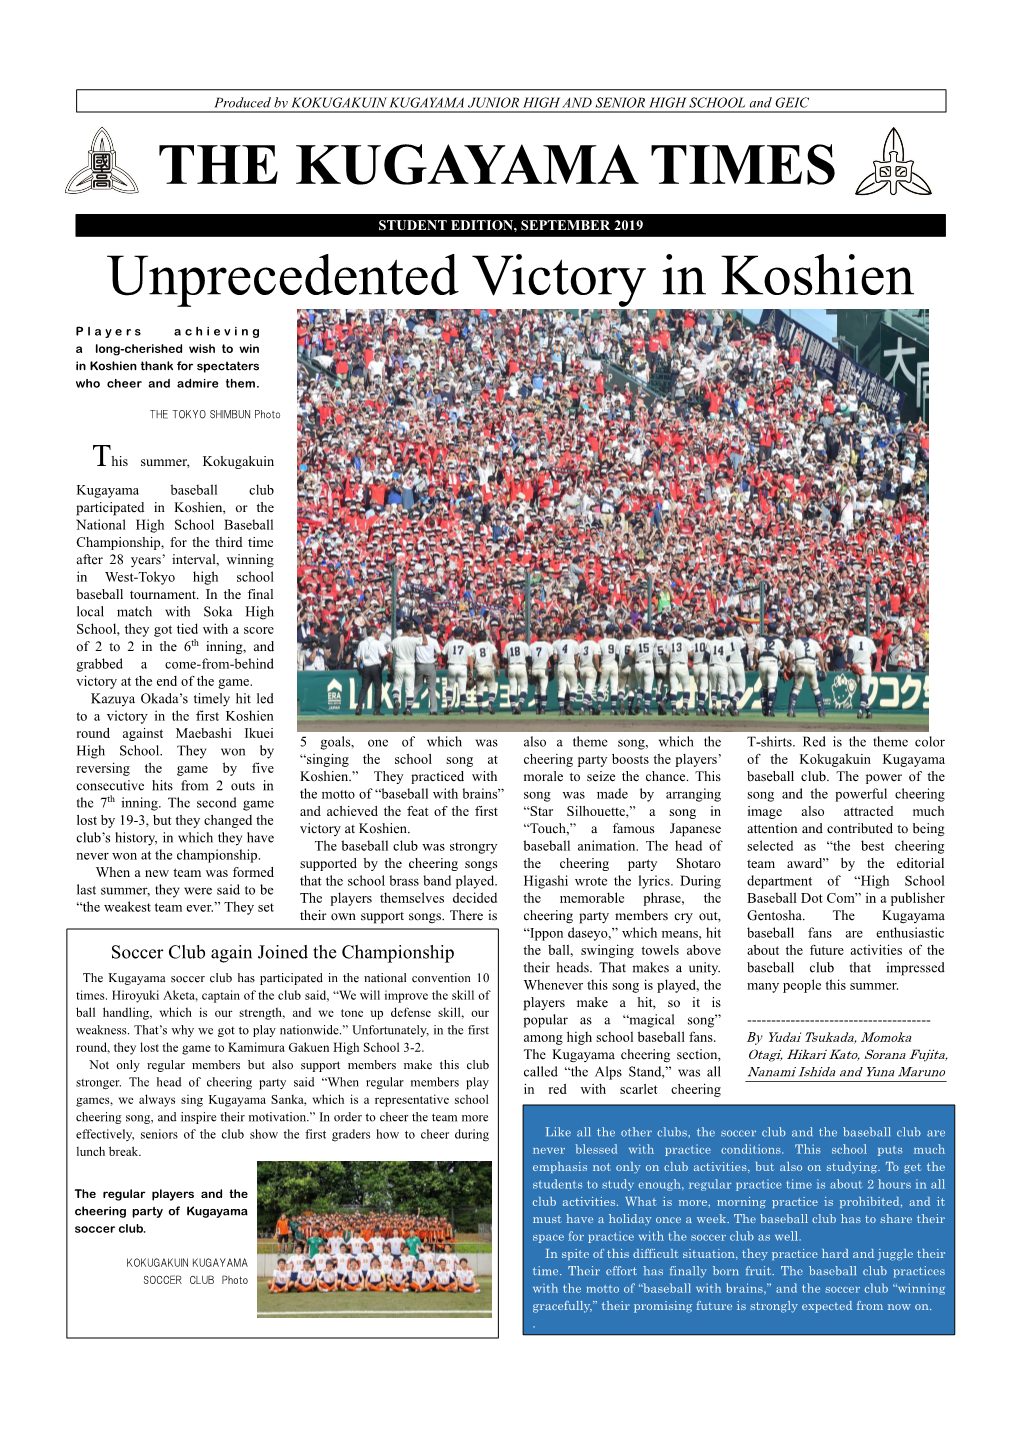 Unprecedented Victory in Koshien the KUGAYAMA TIMES